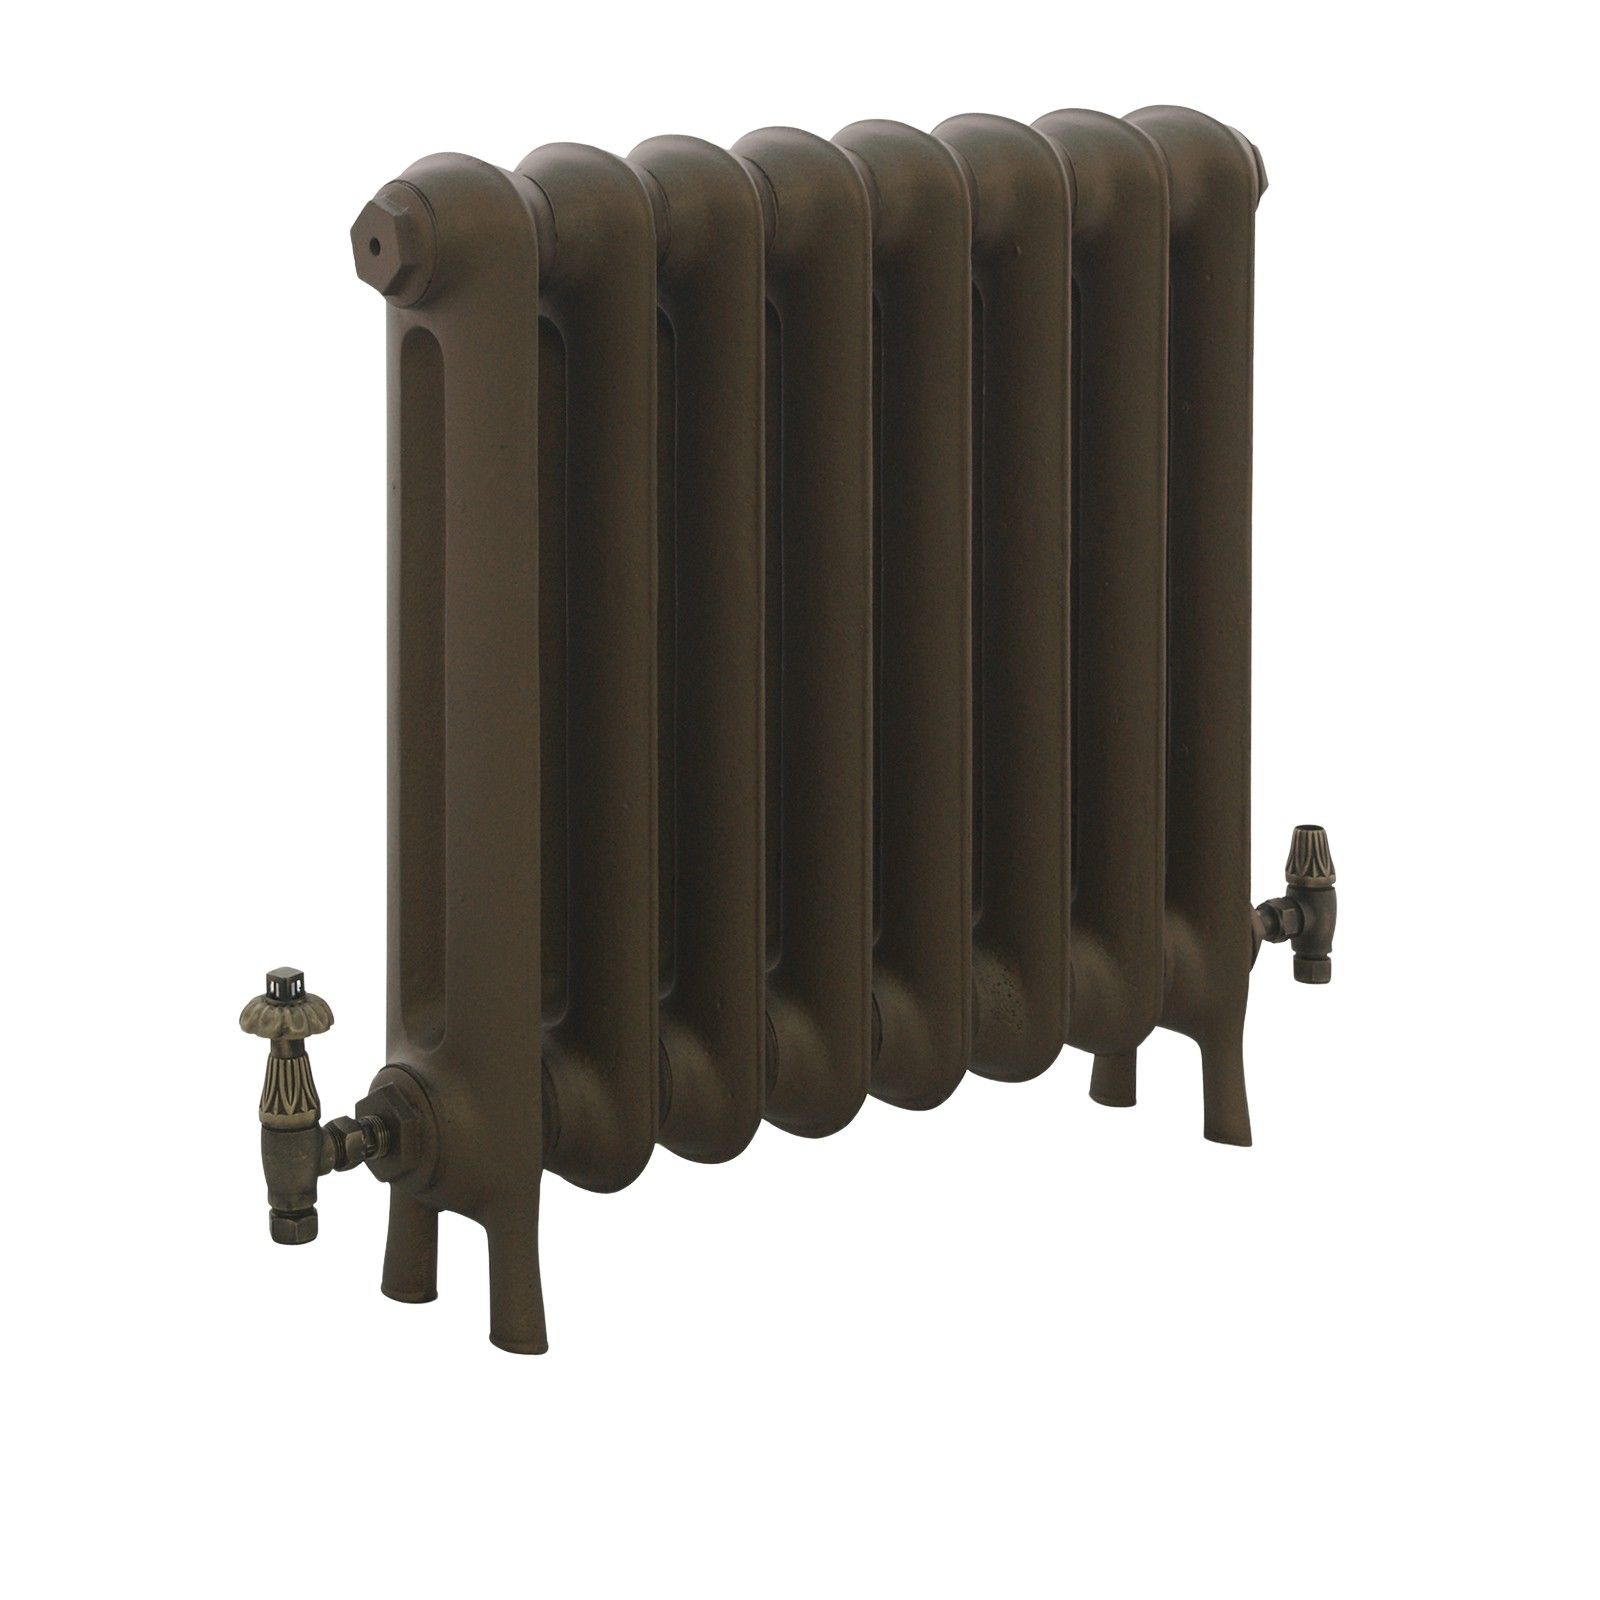 Prince radiator 2 columns 795mm high